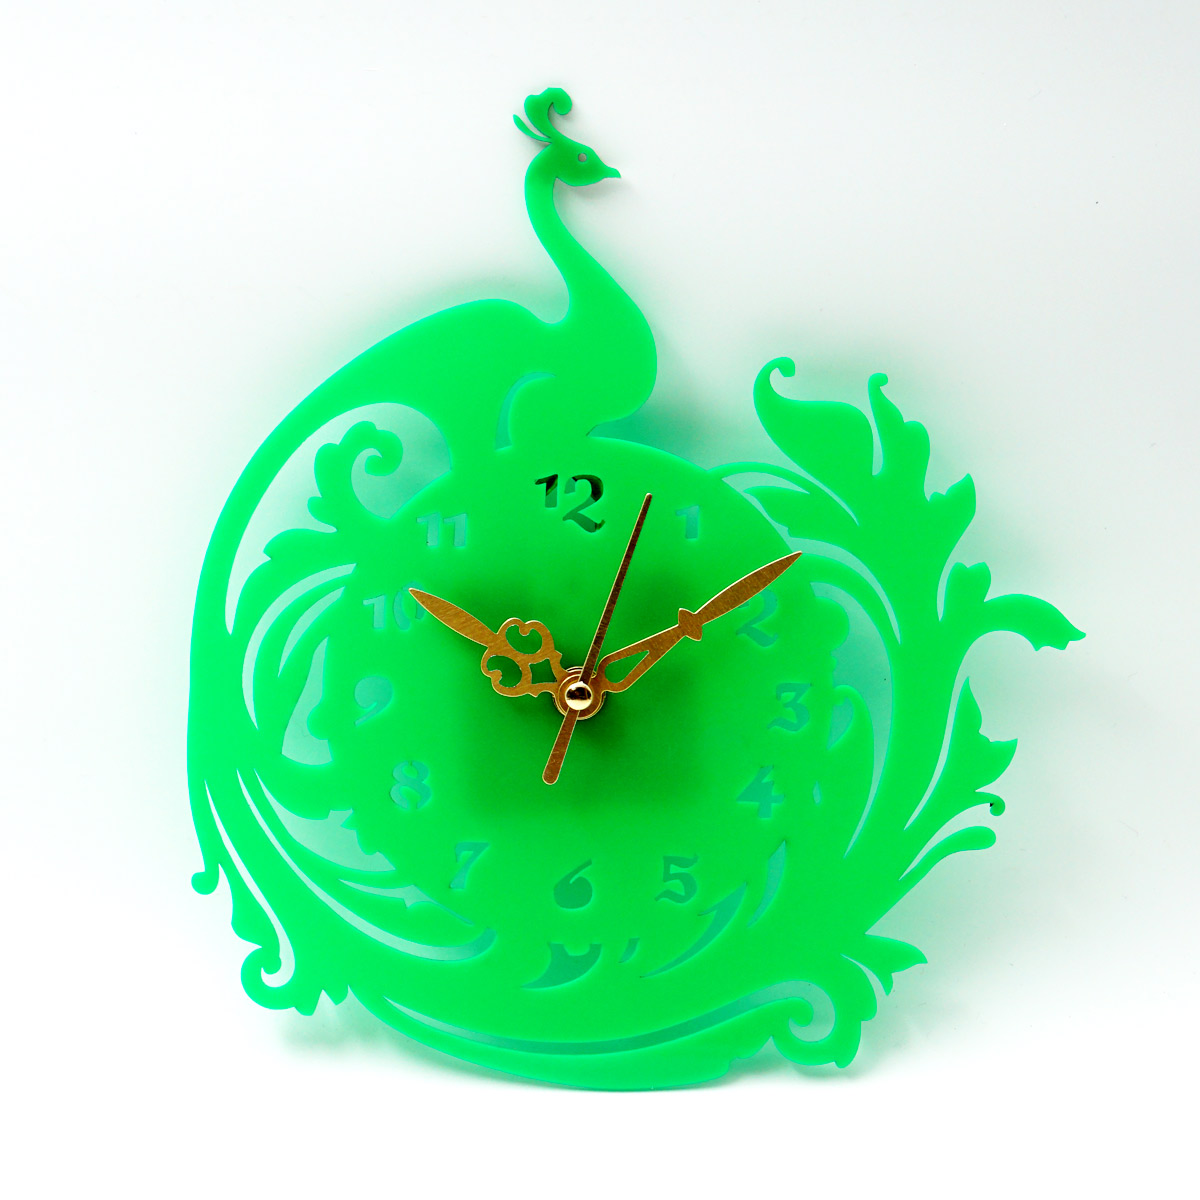 penhouse.in Customizable Acrylic Green Color Peacock Design Wall Clock SKU ACC039